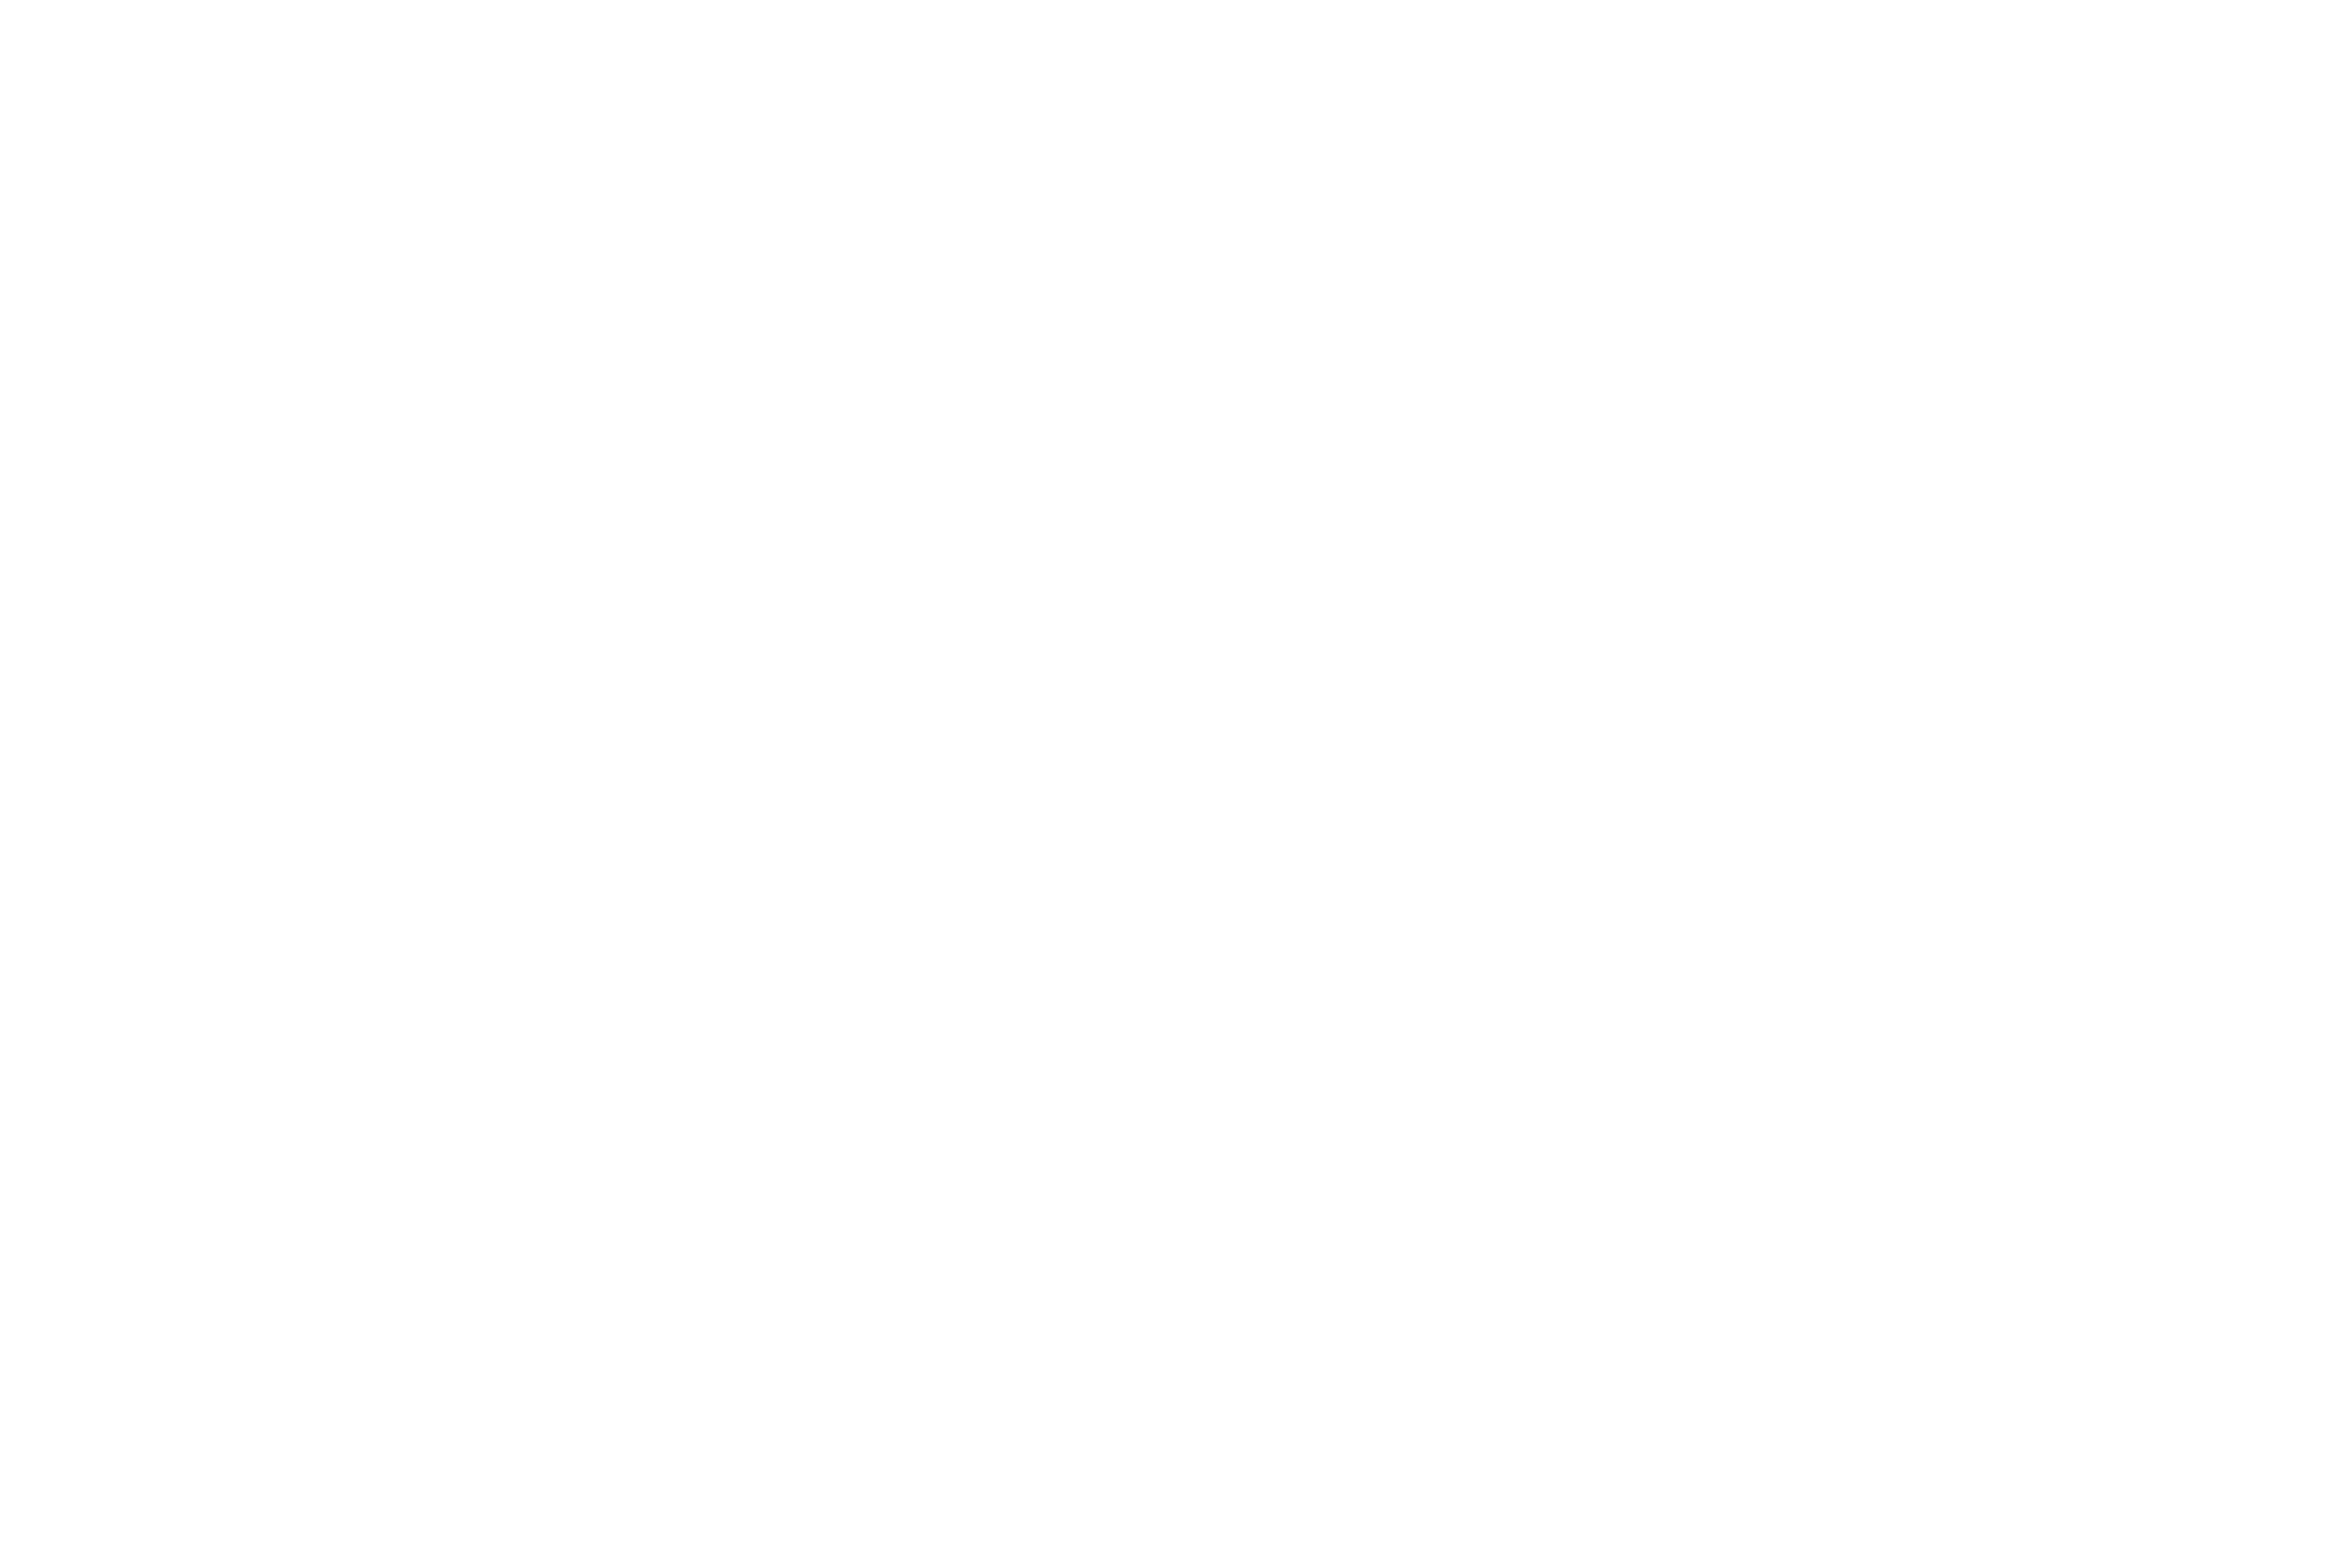 Nilandi Web Services